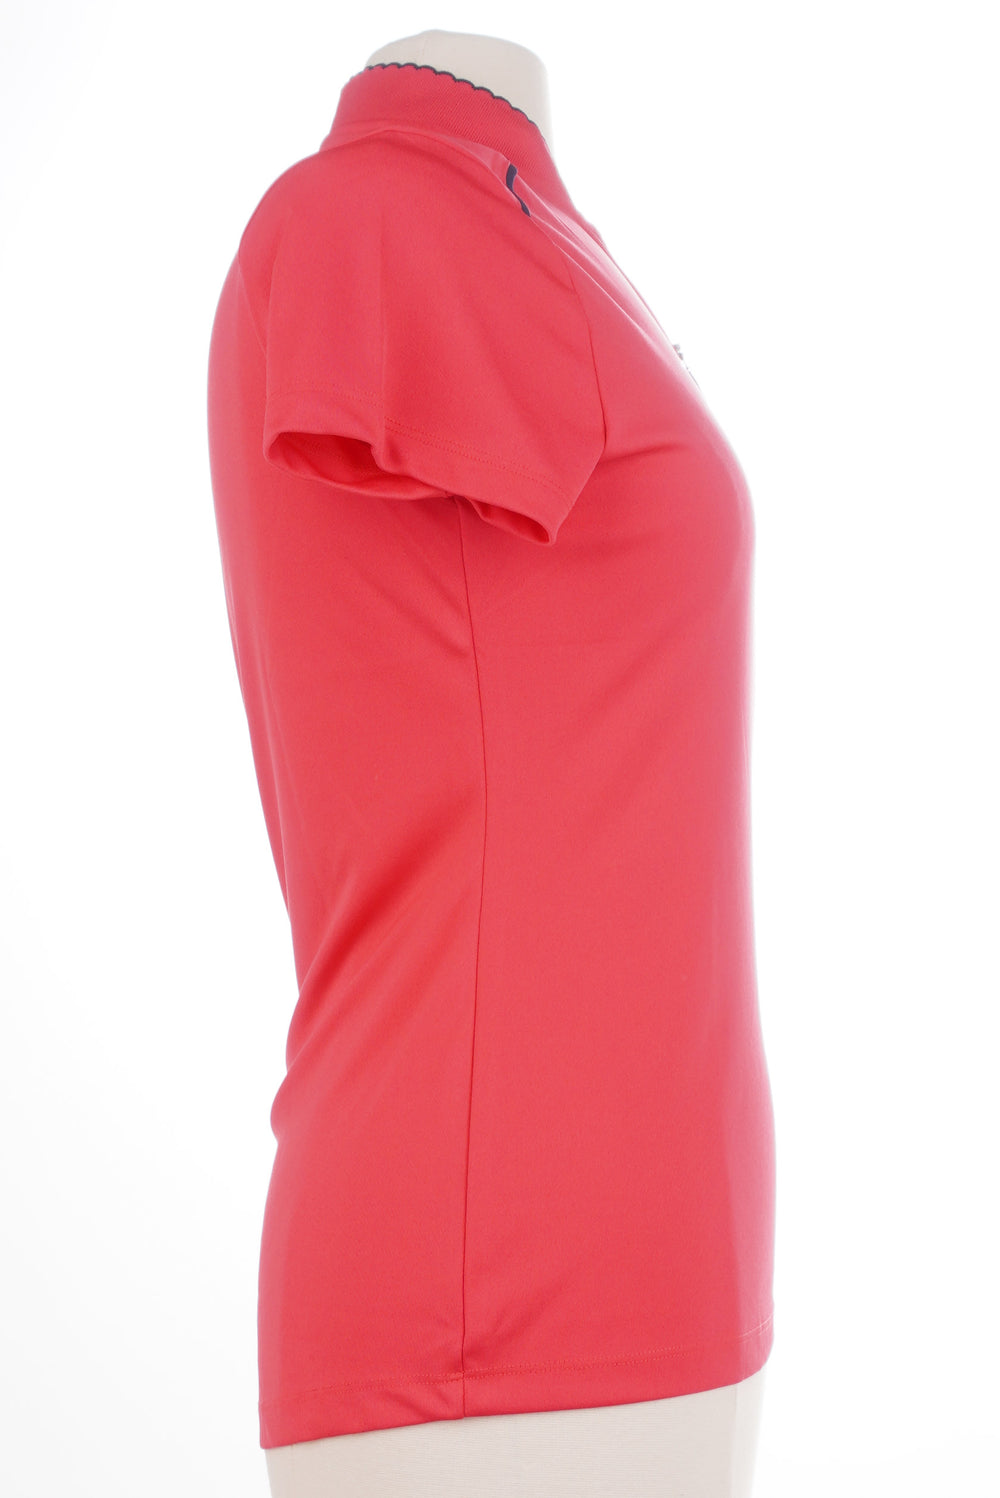 Greg Norman Scallop Collar Short Sleeve - Strawberry - Size Medium - Skorzie